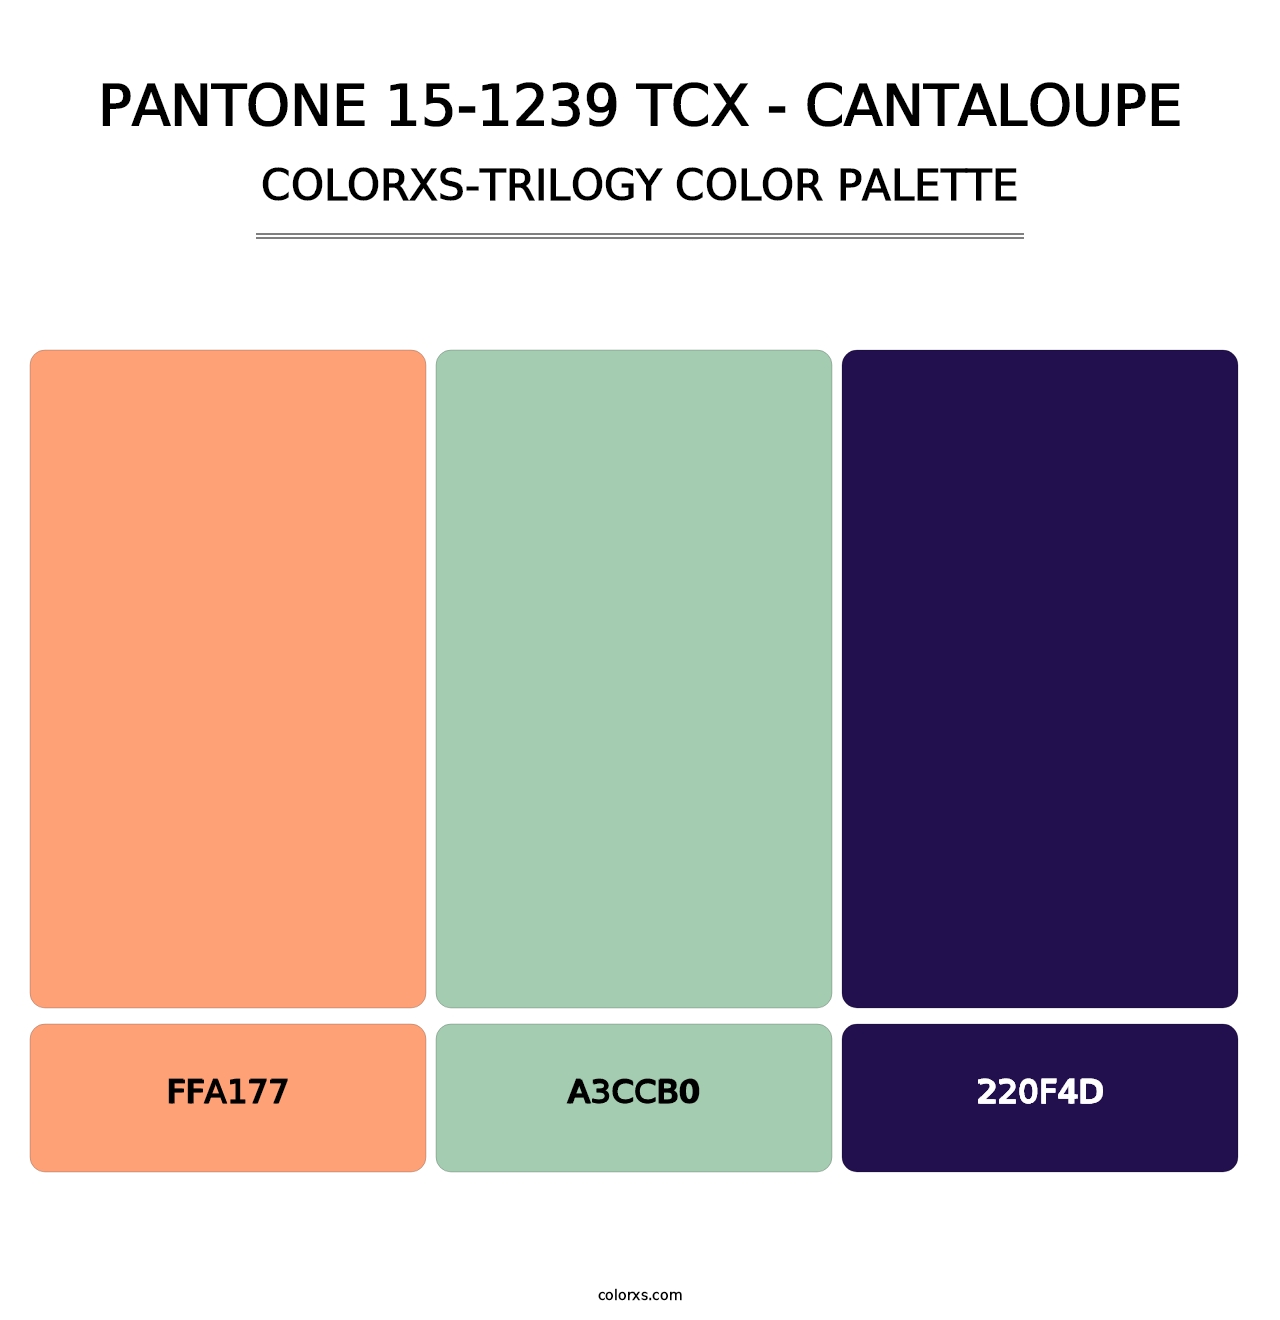 PANTONE 15-1239 TCX - Cantaloupe - Colorxs Trilogy Palette